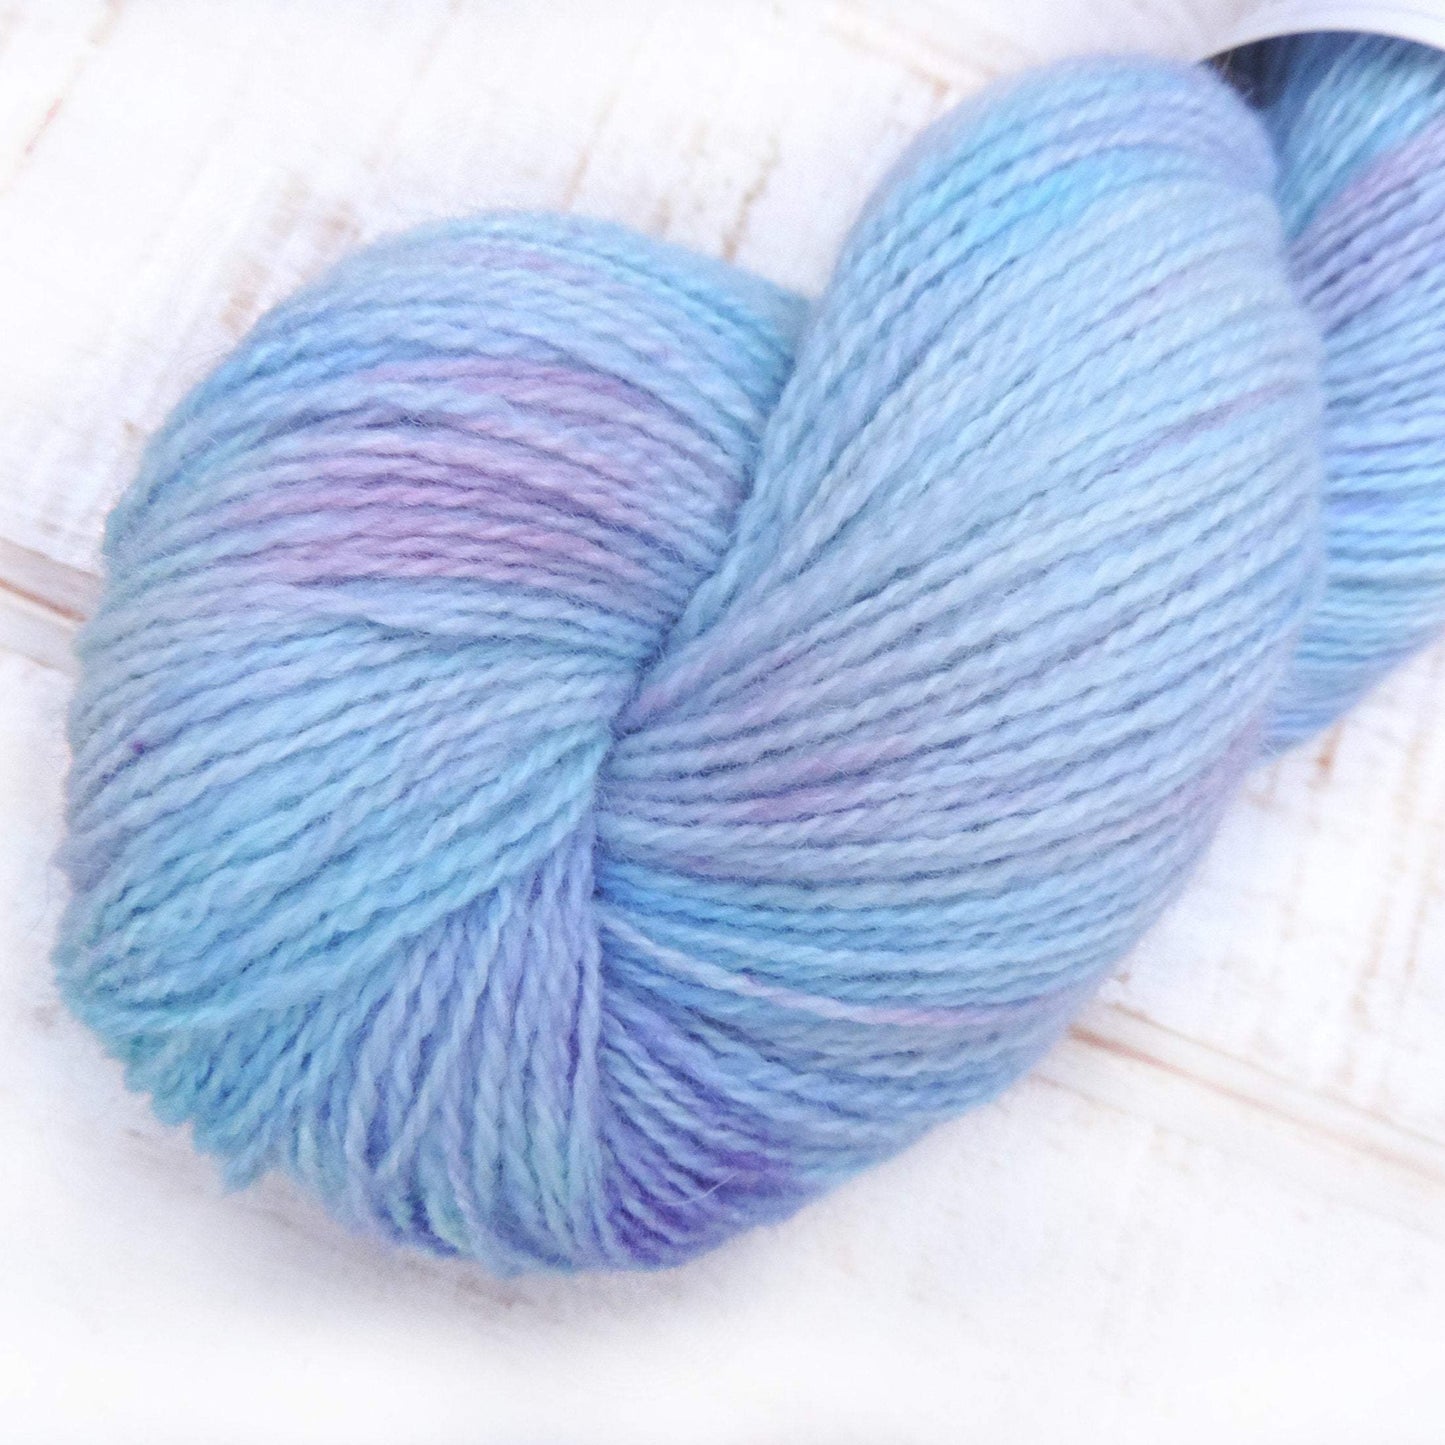 Unicorn dreams - Trollfjord Sock - Hand Dyed Yarn - Variegated Yarn